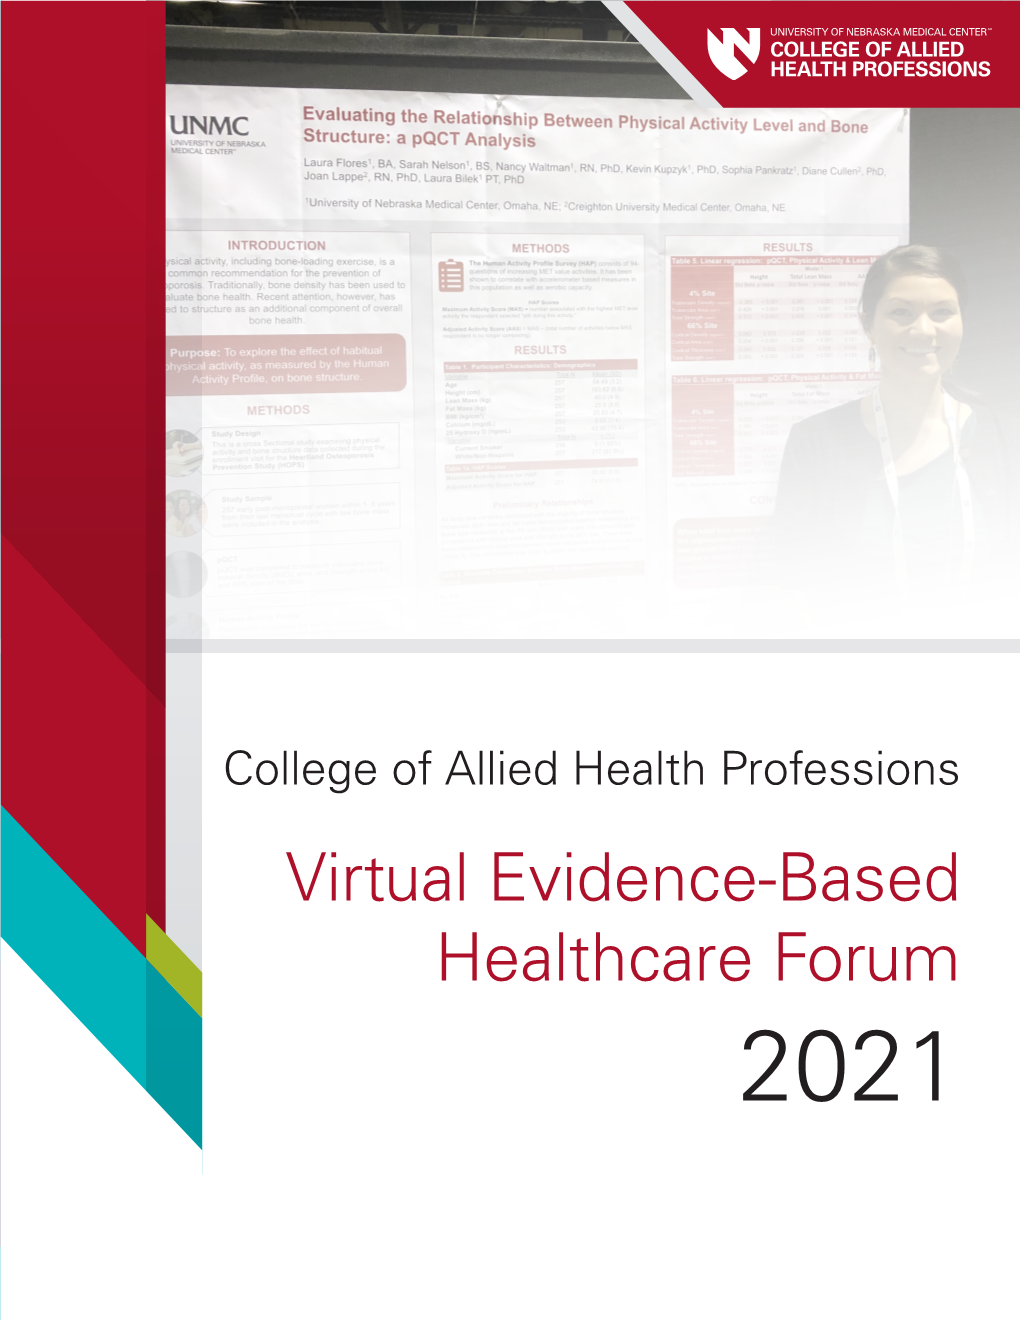 Virtual Evidence-Based Healthcare Forum 2021